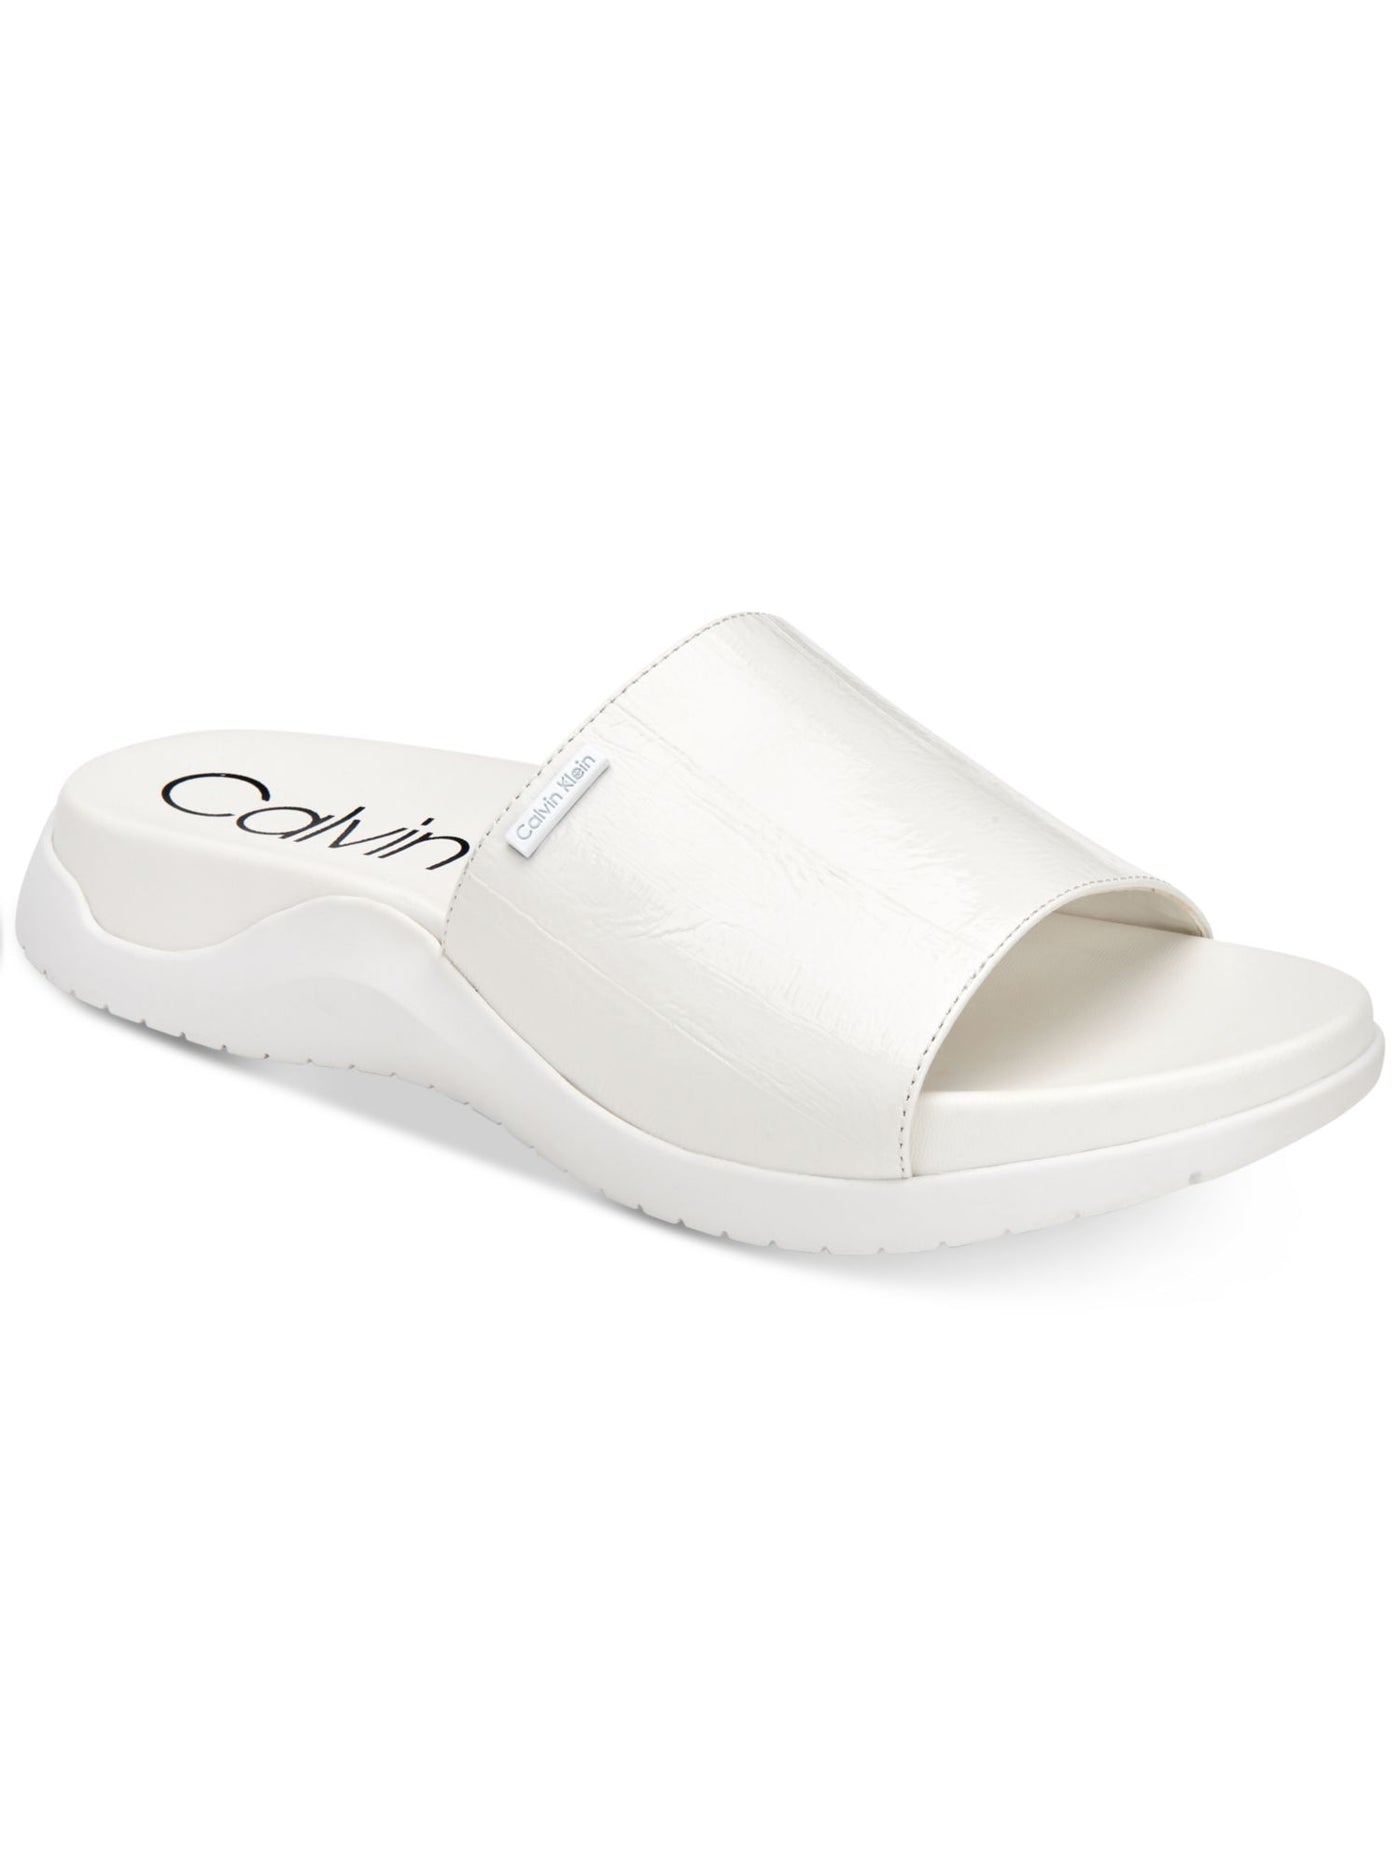 CALVIN KLEIN Womens White Platform 1 Cushioned Ubi Round Toe Wedge Slip On Slide Sandals Shoes 5